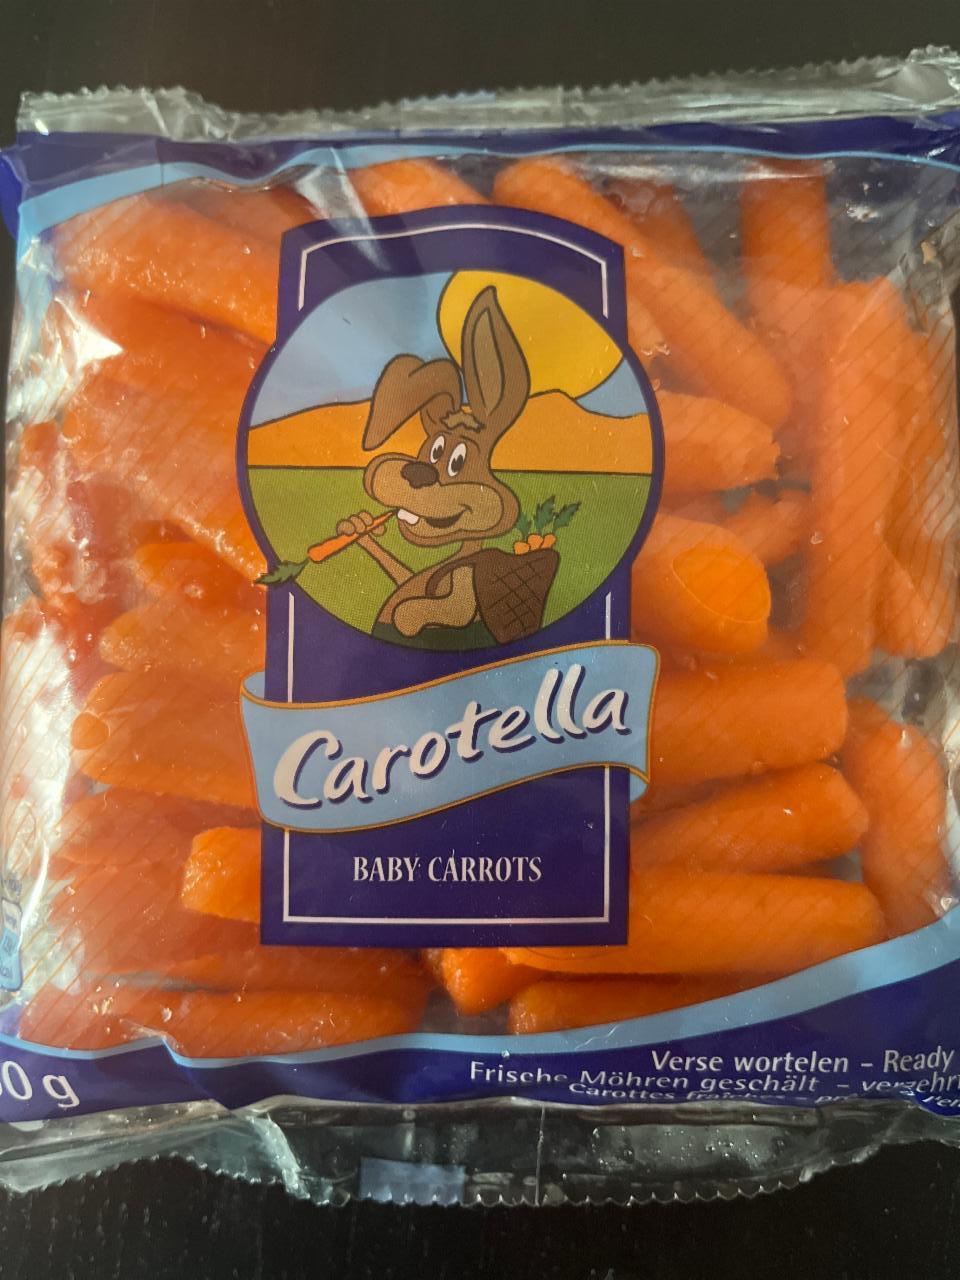 Fotografie - Baby Carrots Carotella